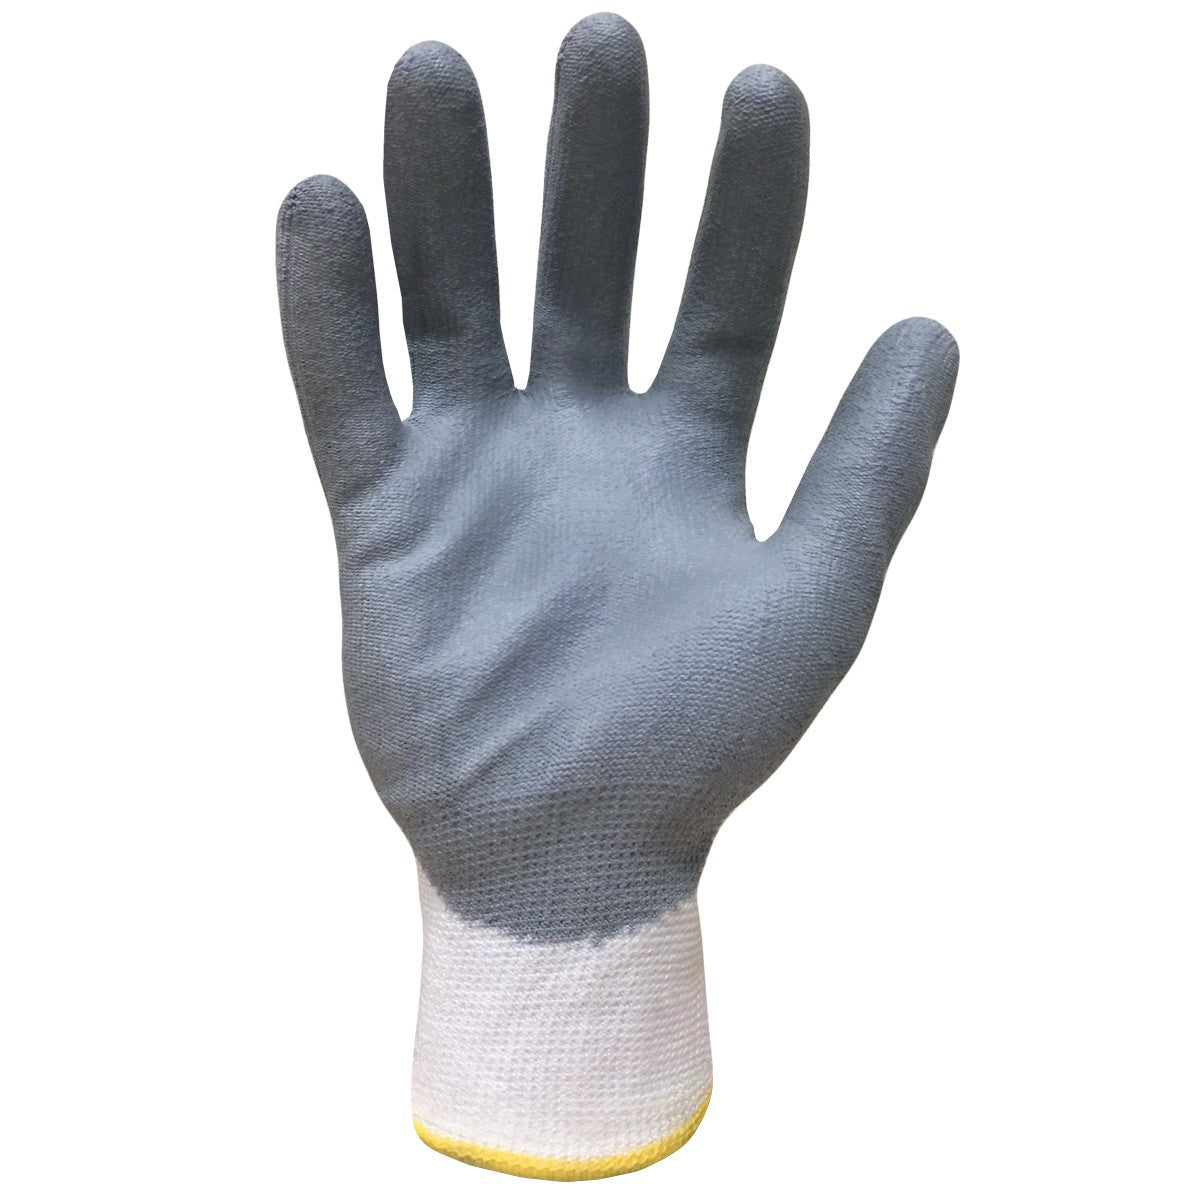 Ironclad IKC3 Knit Cut 3 Work Gloves